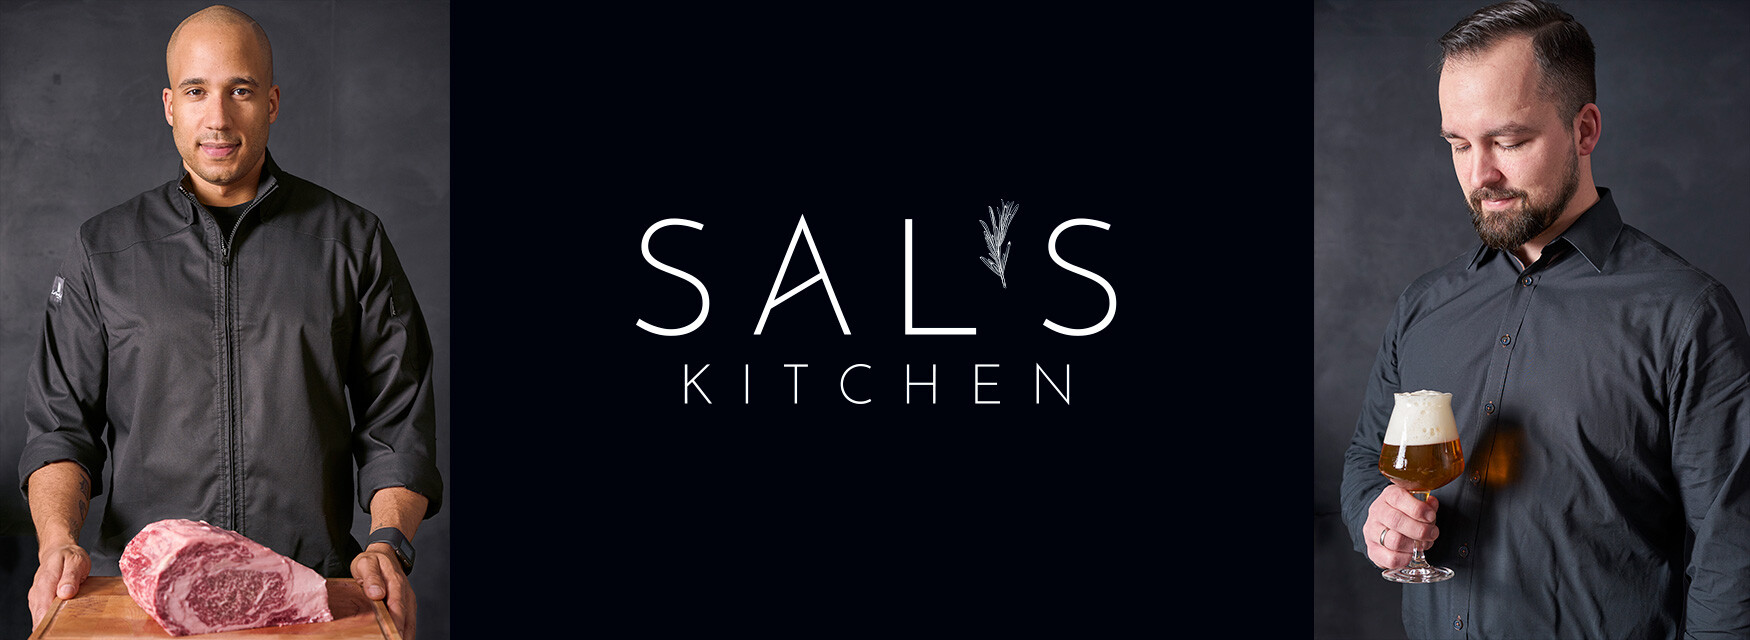 Corporate Identity Design Sal's Kitchen